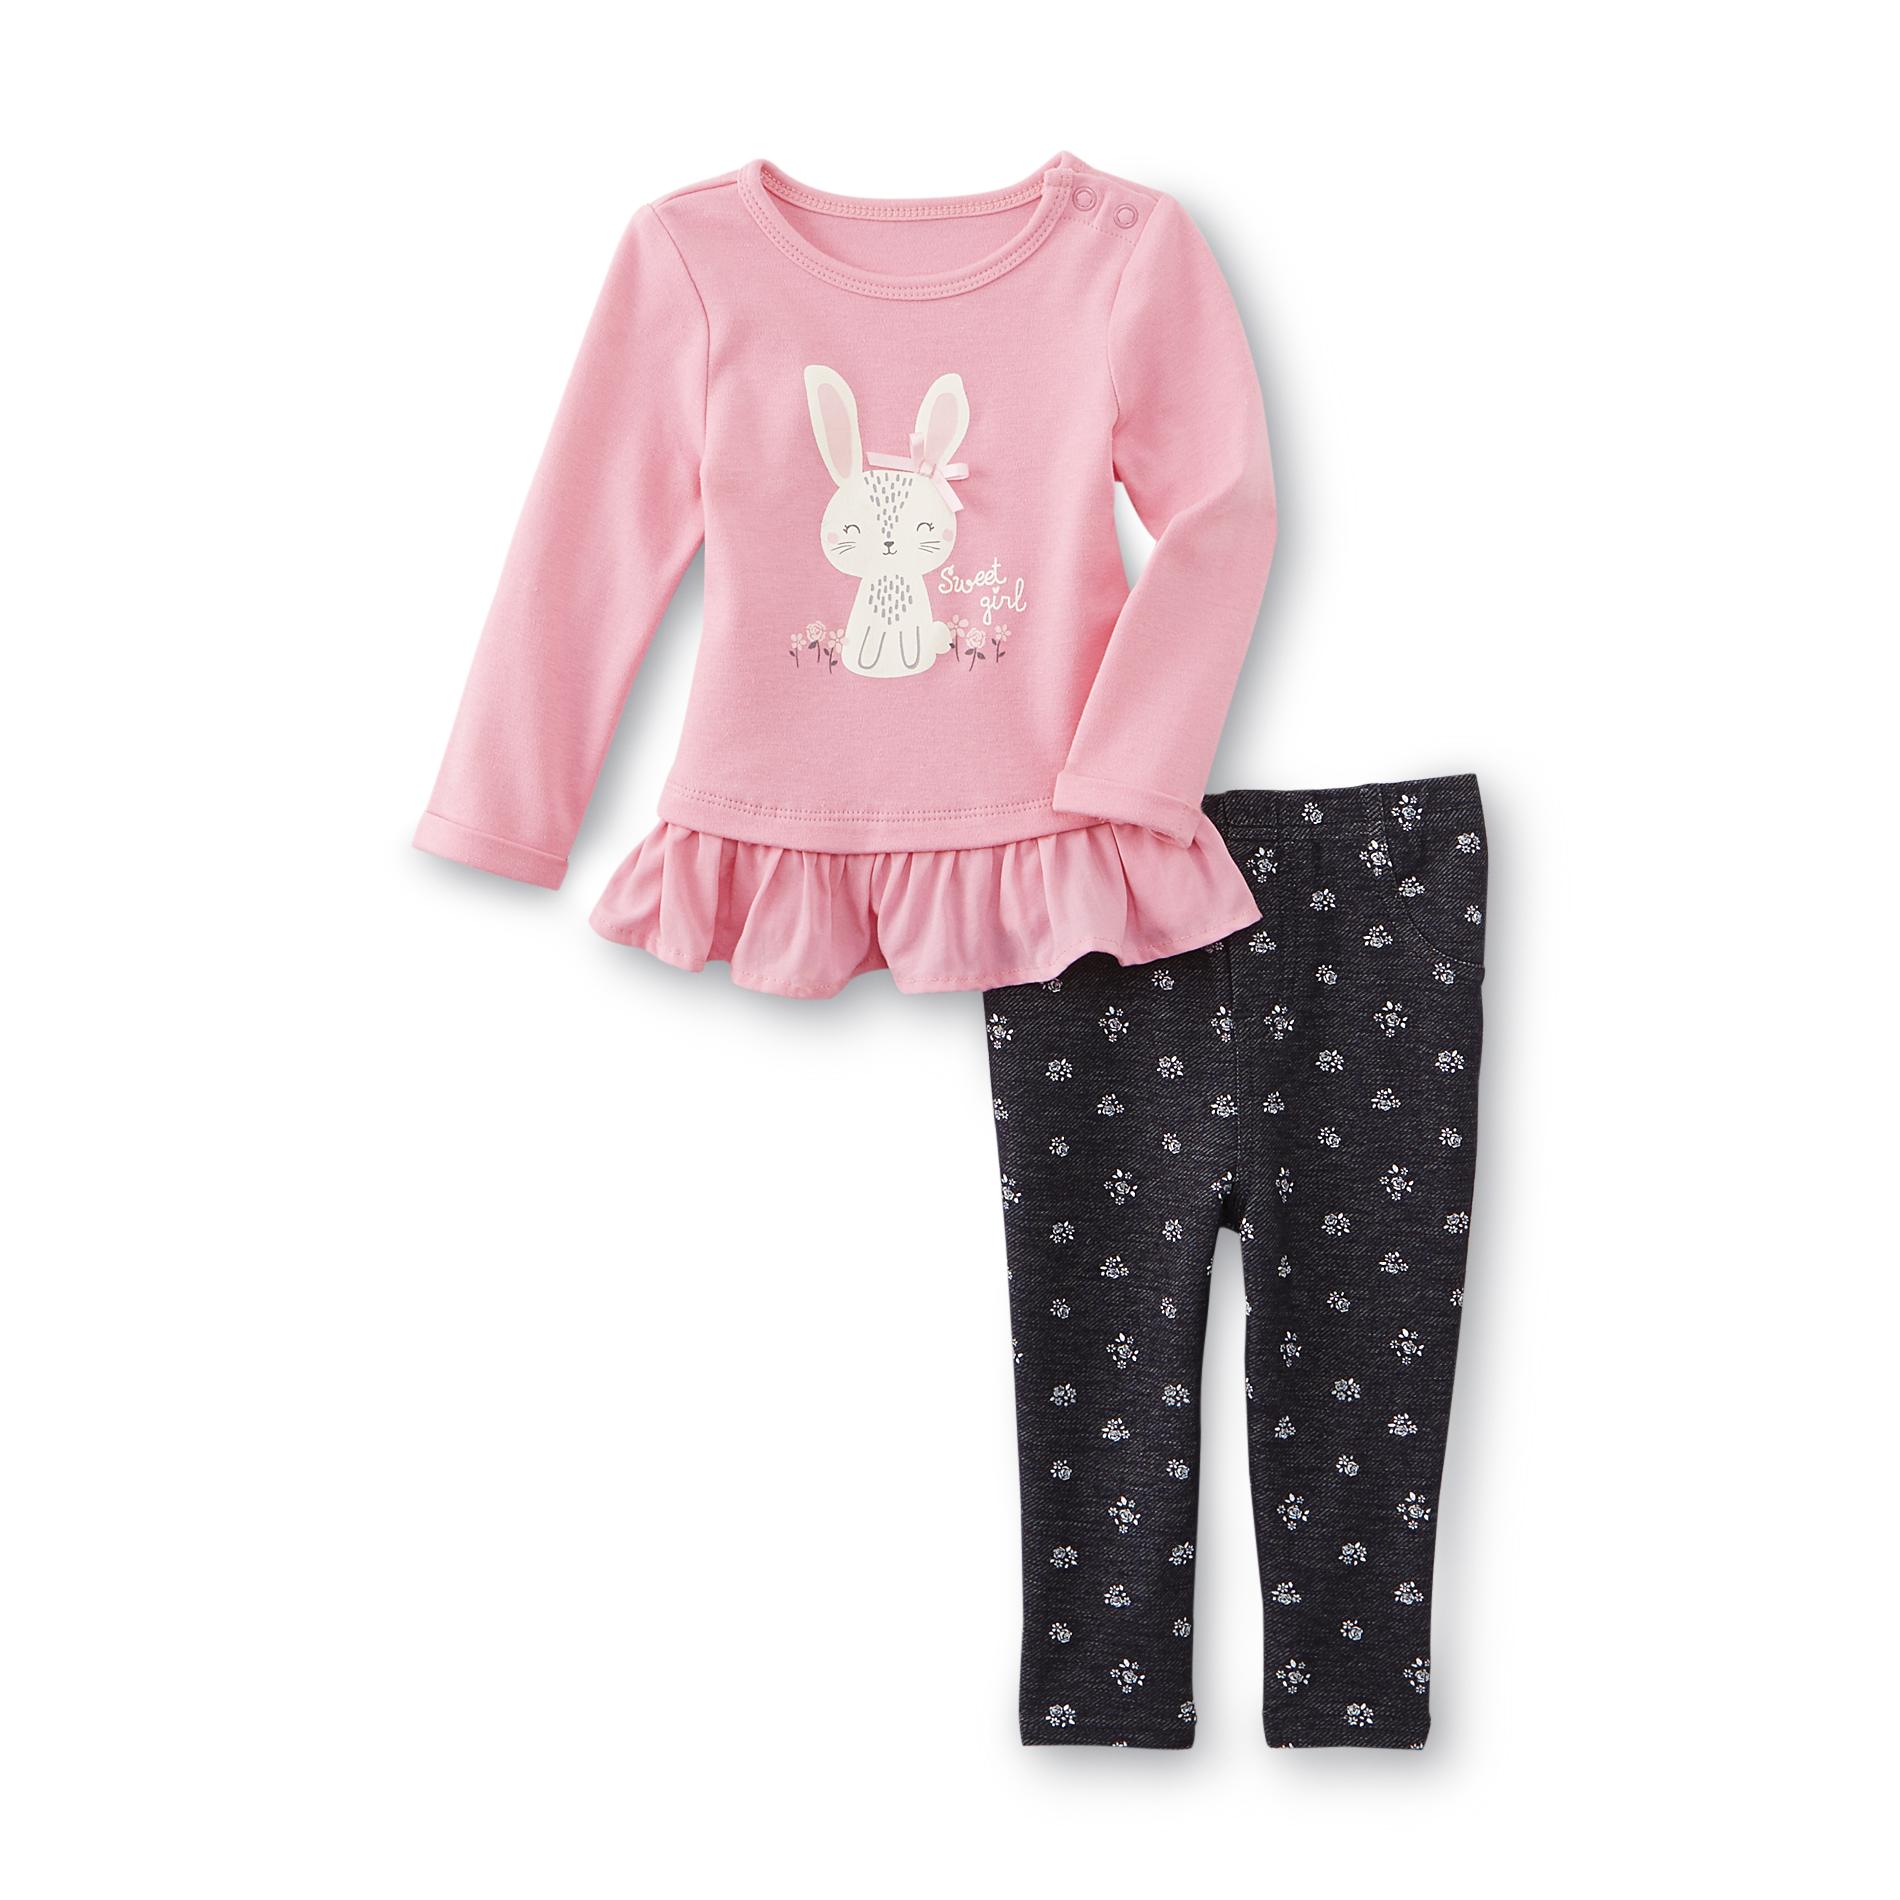 Little Wonders Newborn & Infant Girl's Top & Pants Set - Sweet Girl Bunny